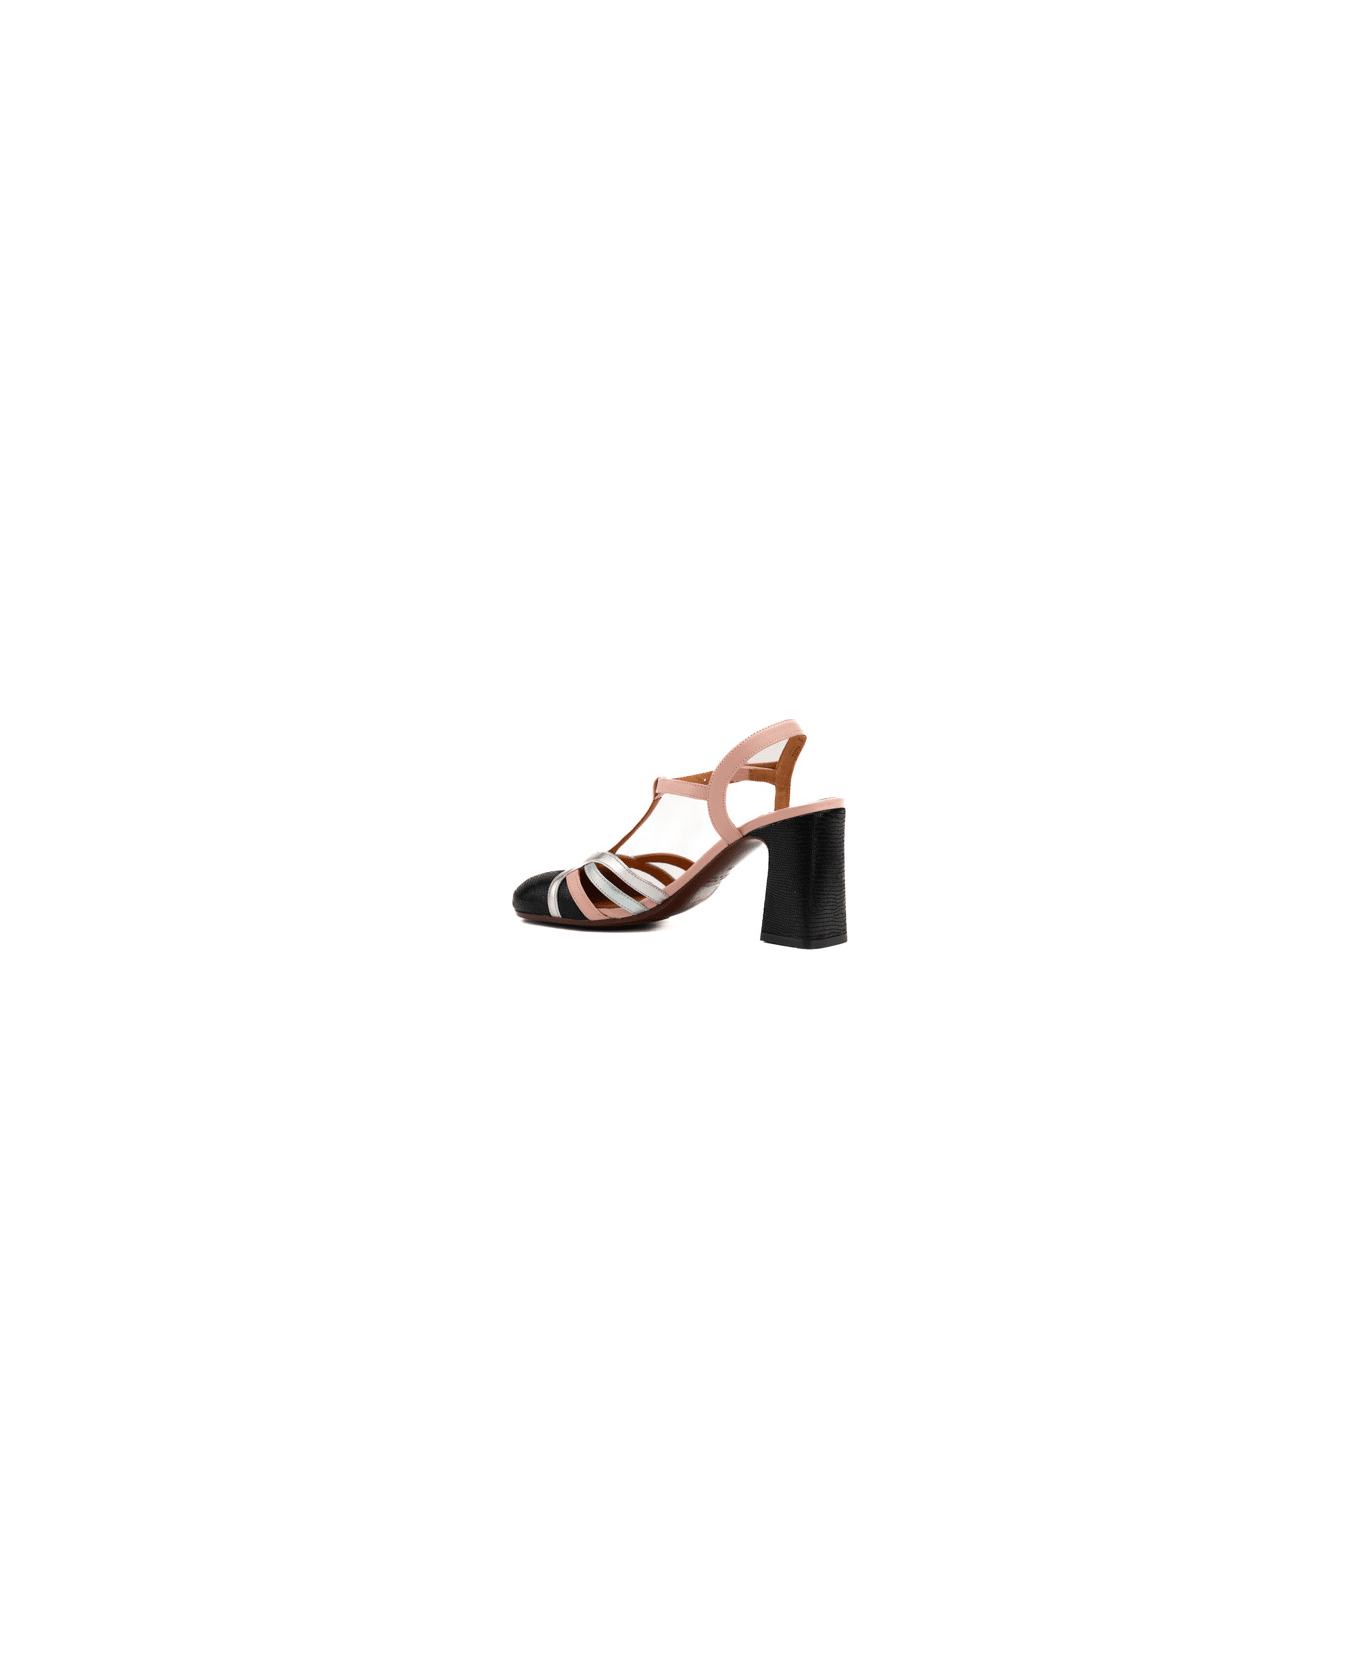 Chie Mihara Mendy Leather Sandals - Negro/pink/acqua